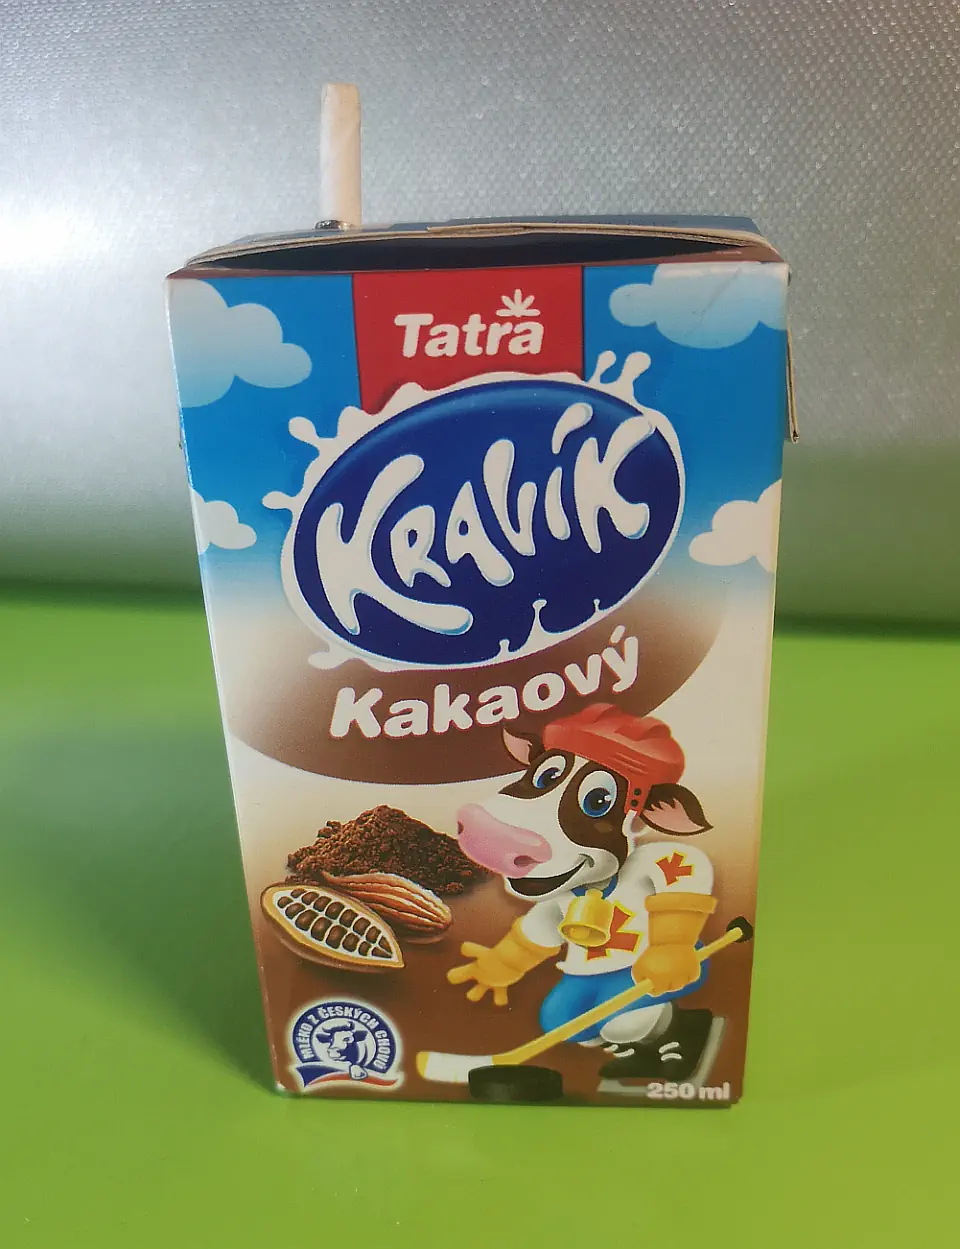 Tatra Kravík kakaový